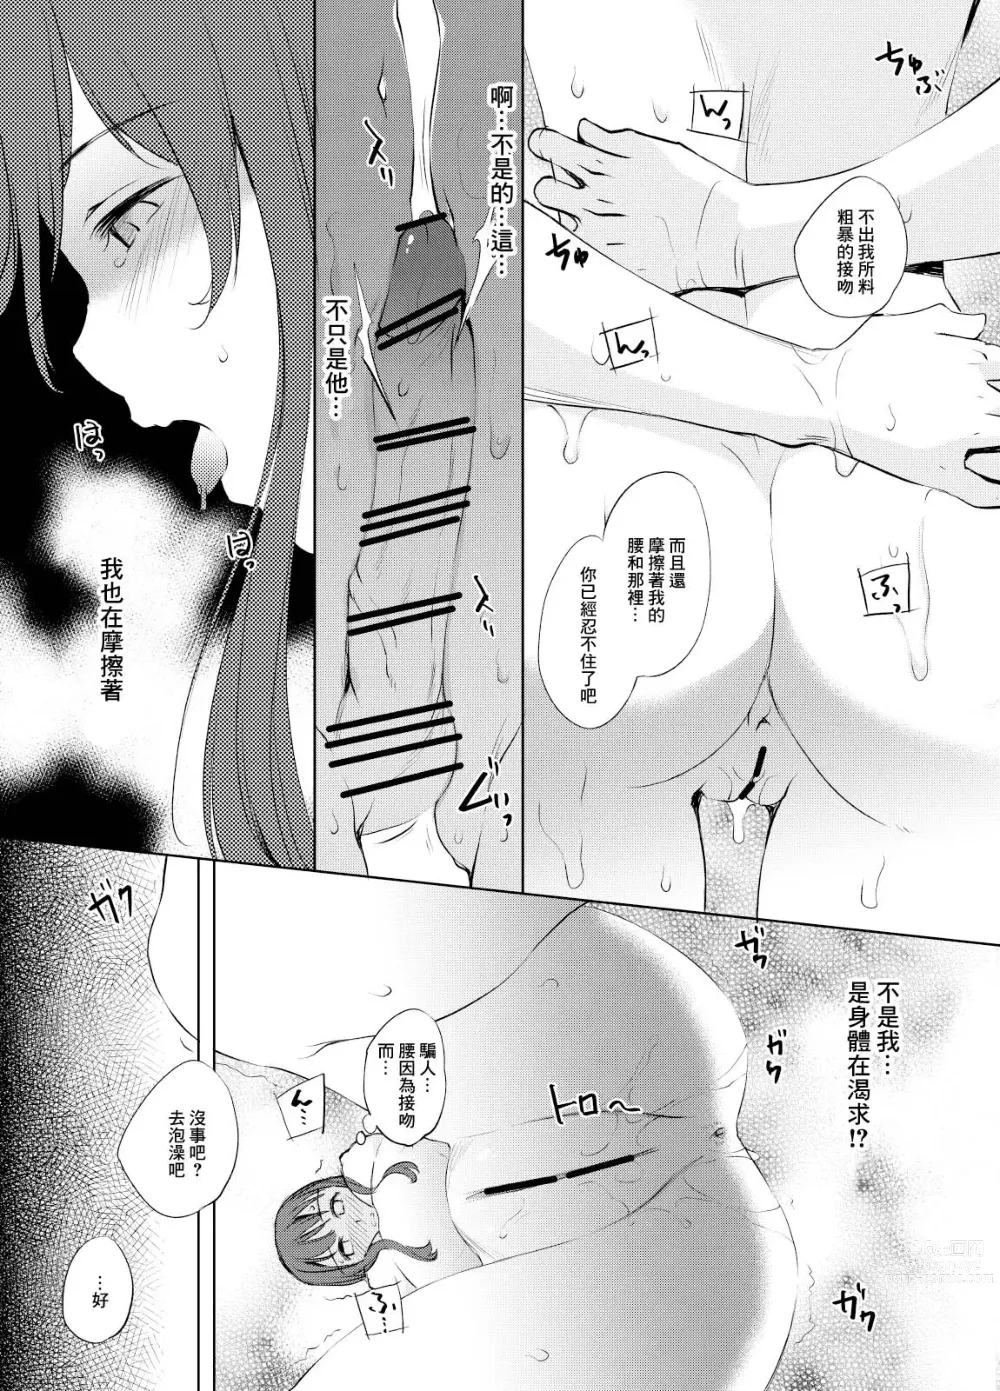 Page 5 of doujinshi Suzumi Tamao Manga